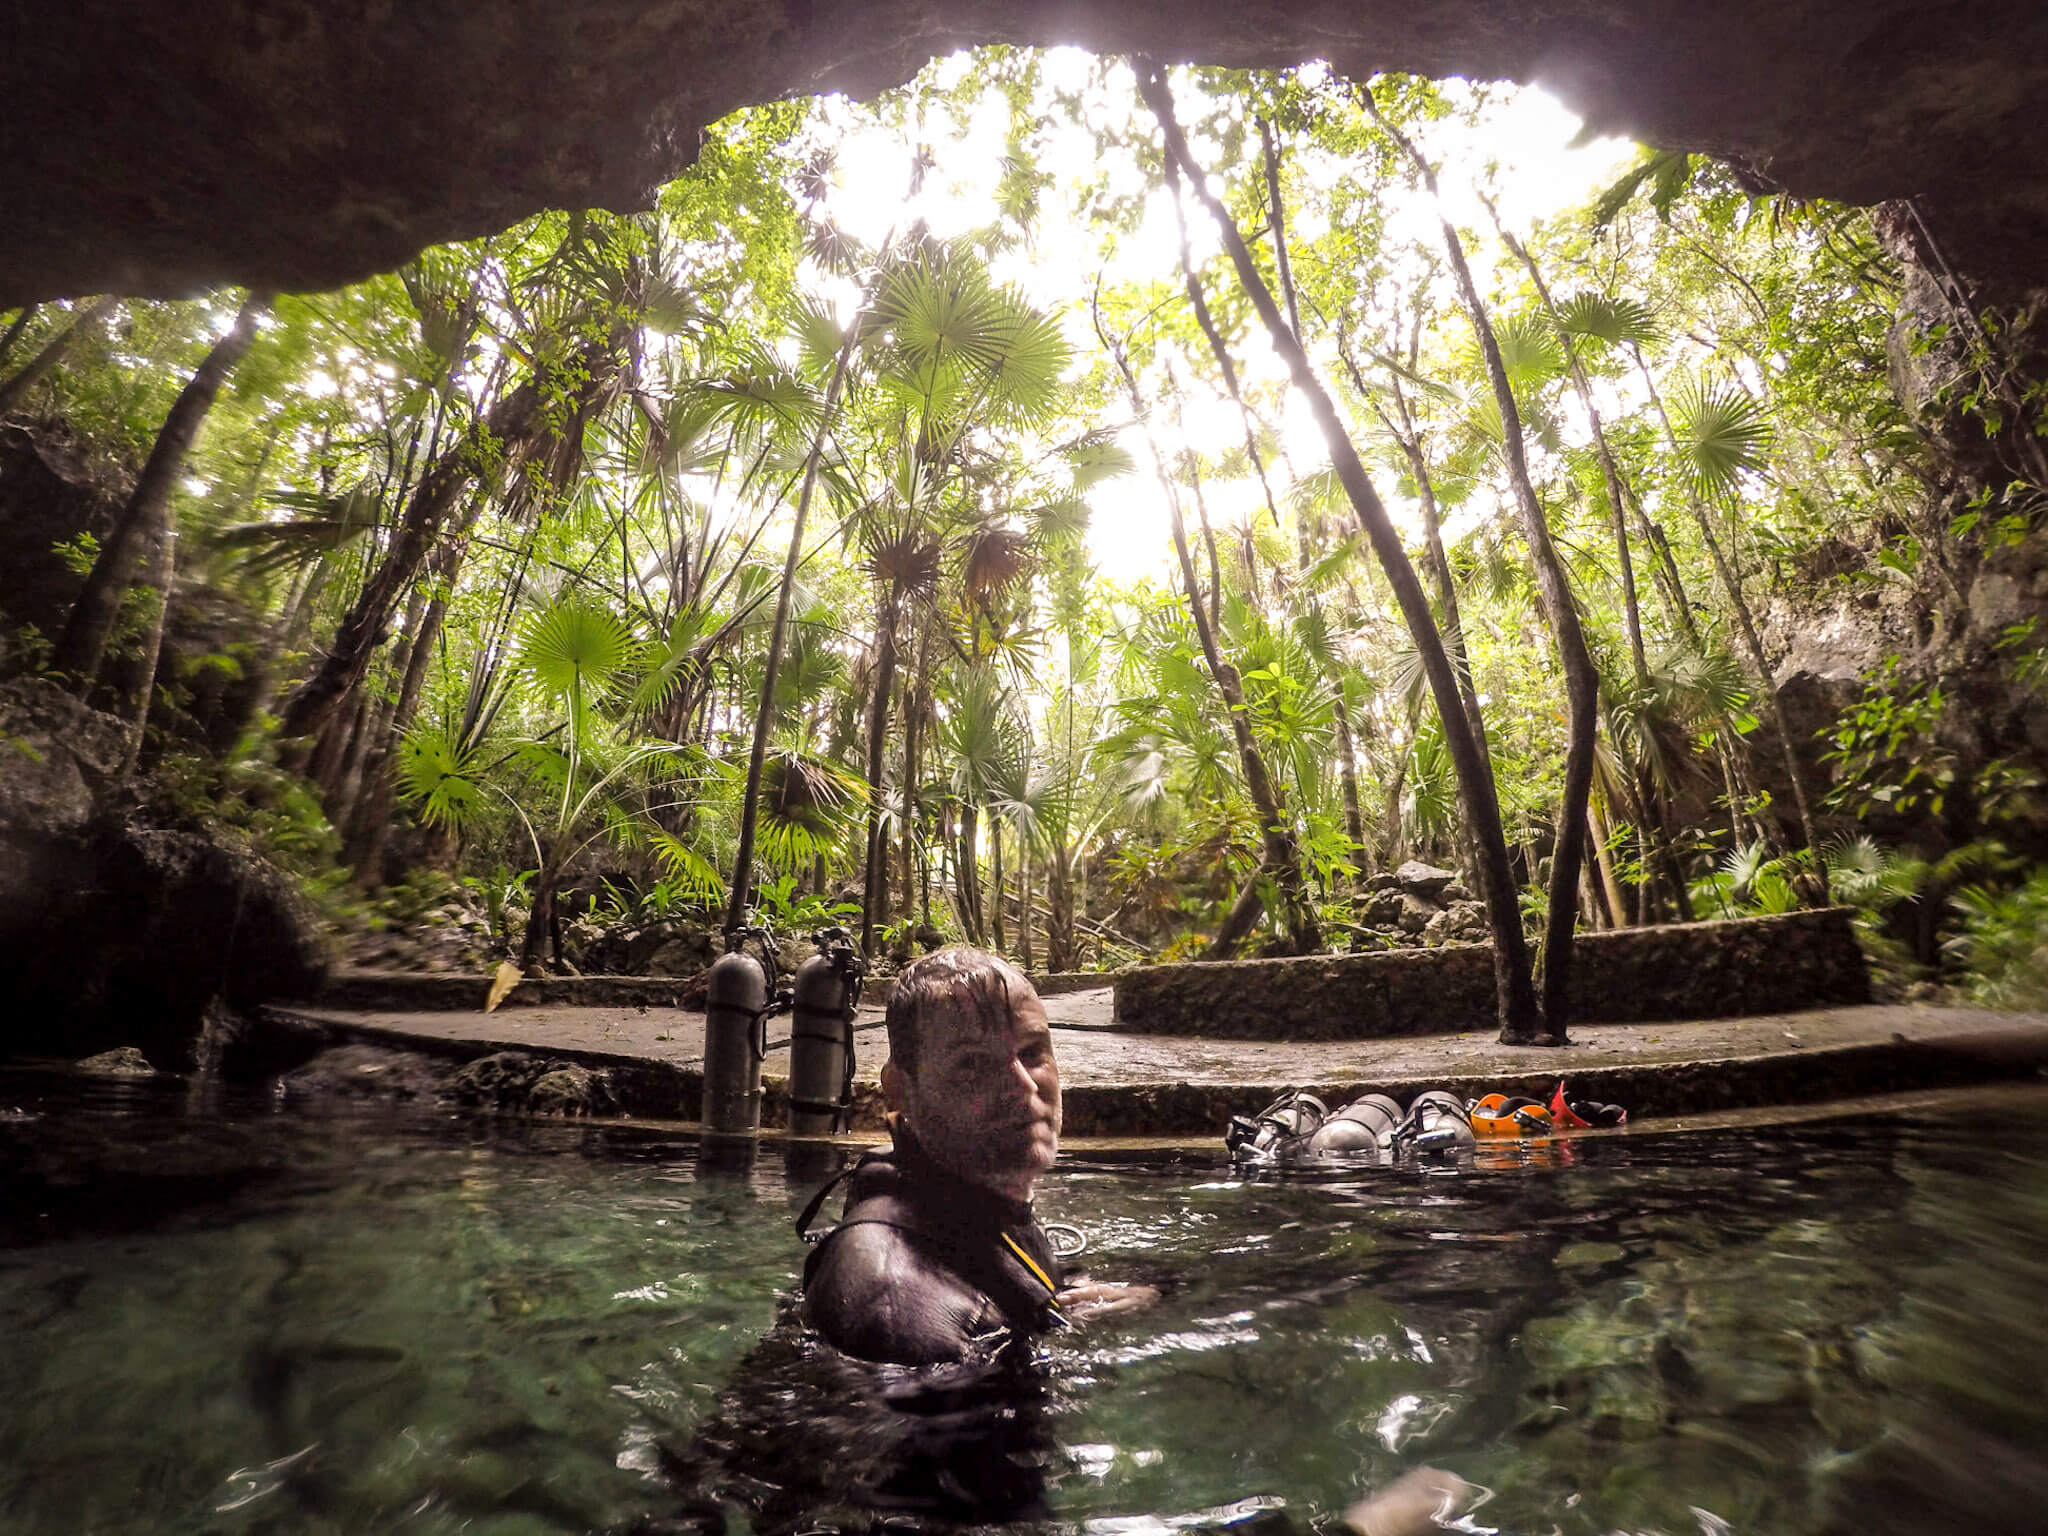 A scuba diver emerges in a cenote after a cave dive